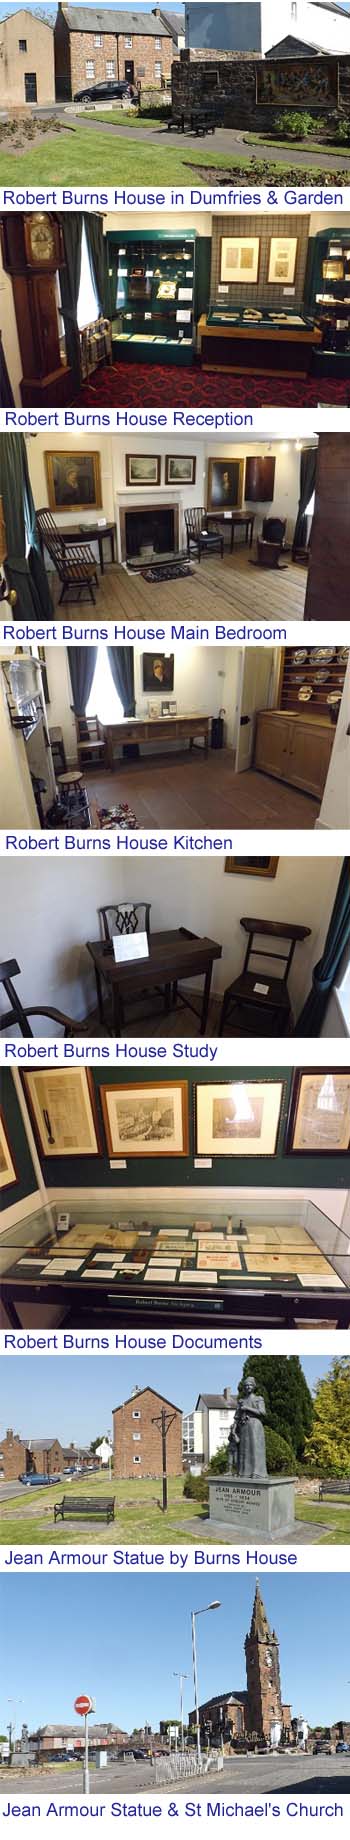 Robert Burns House Dumfries Images